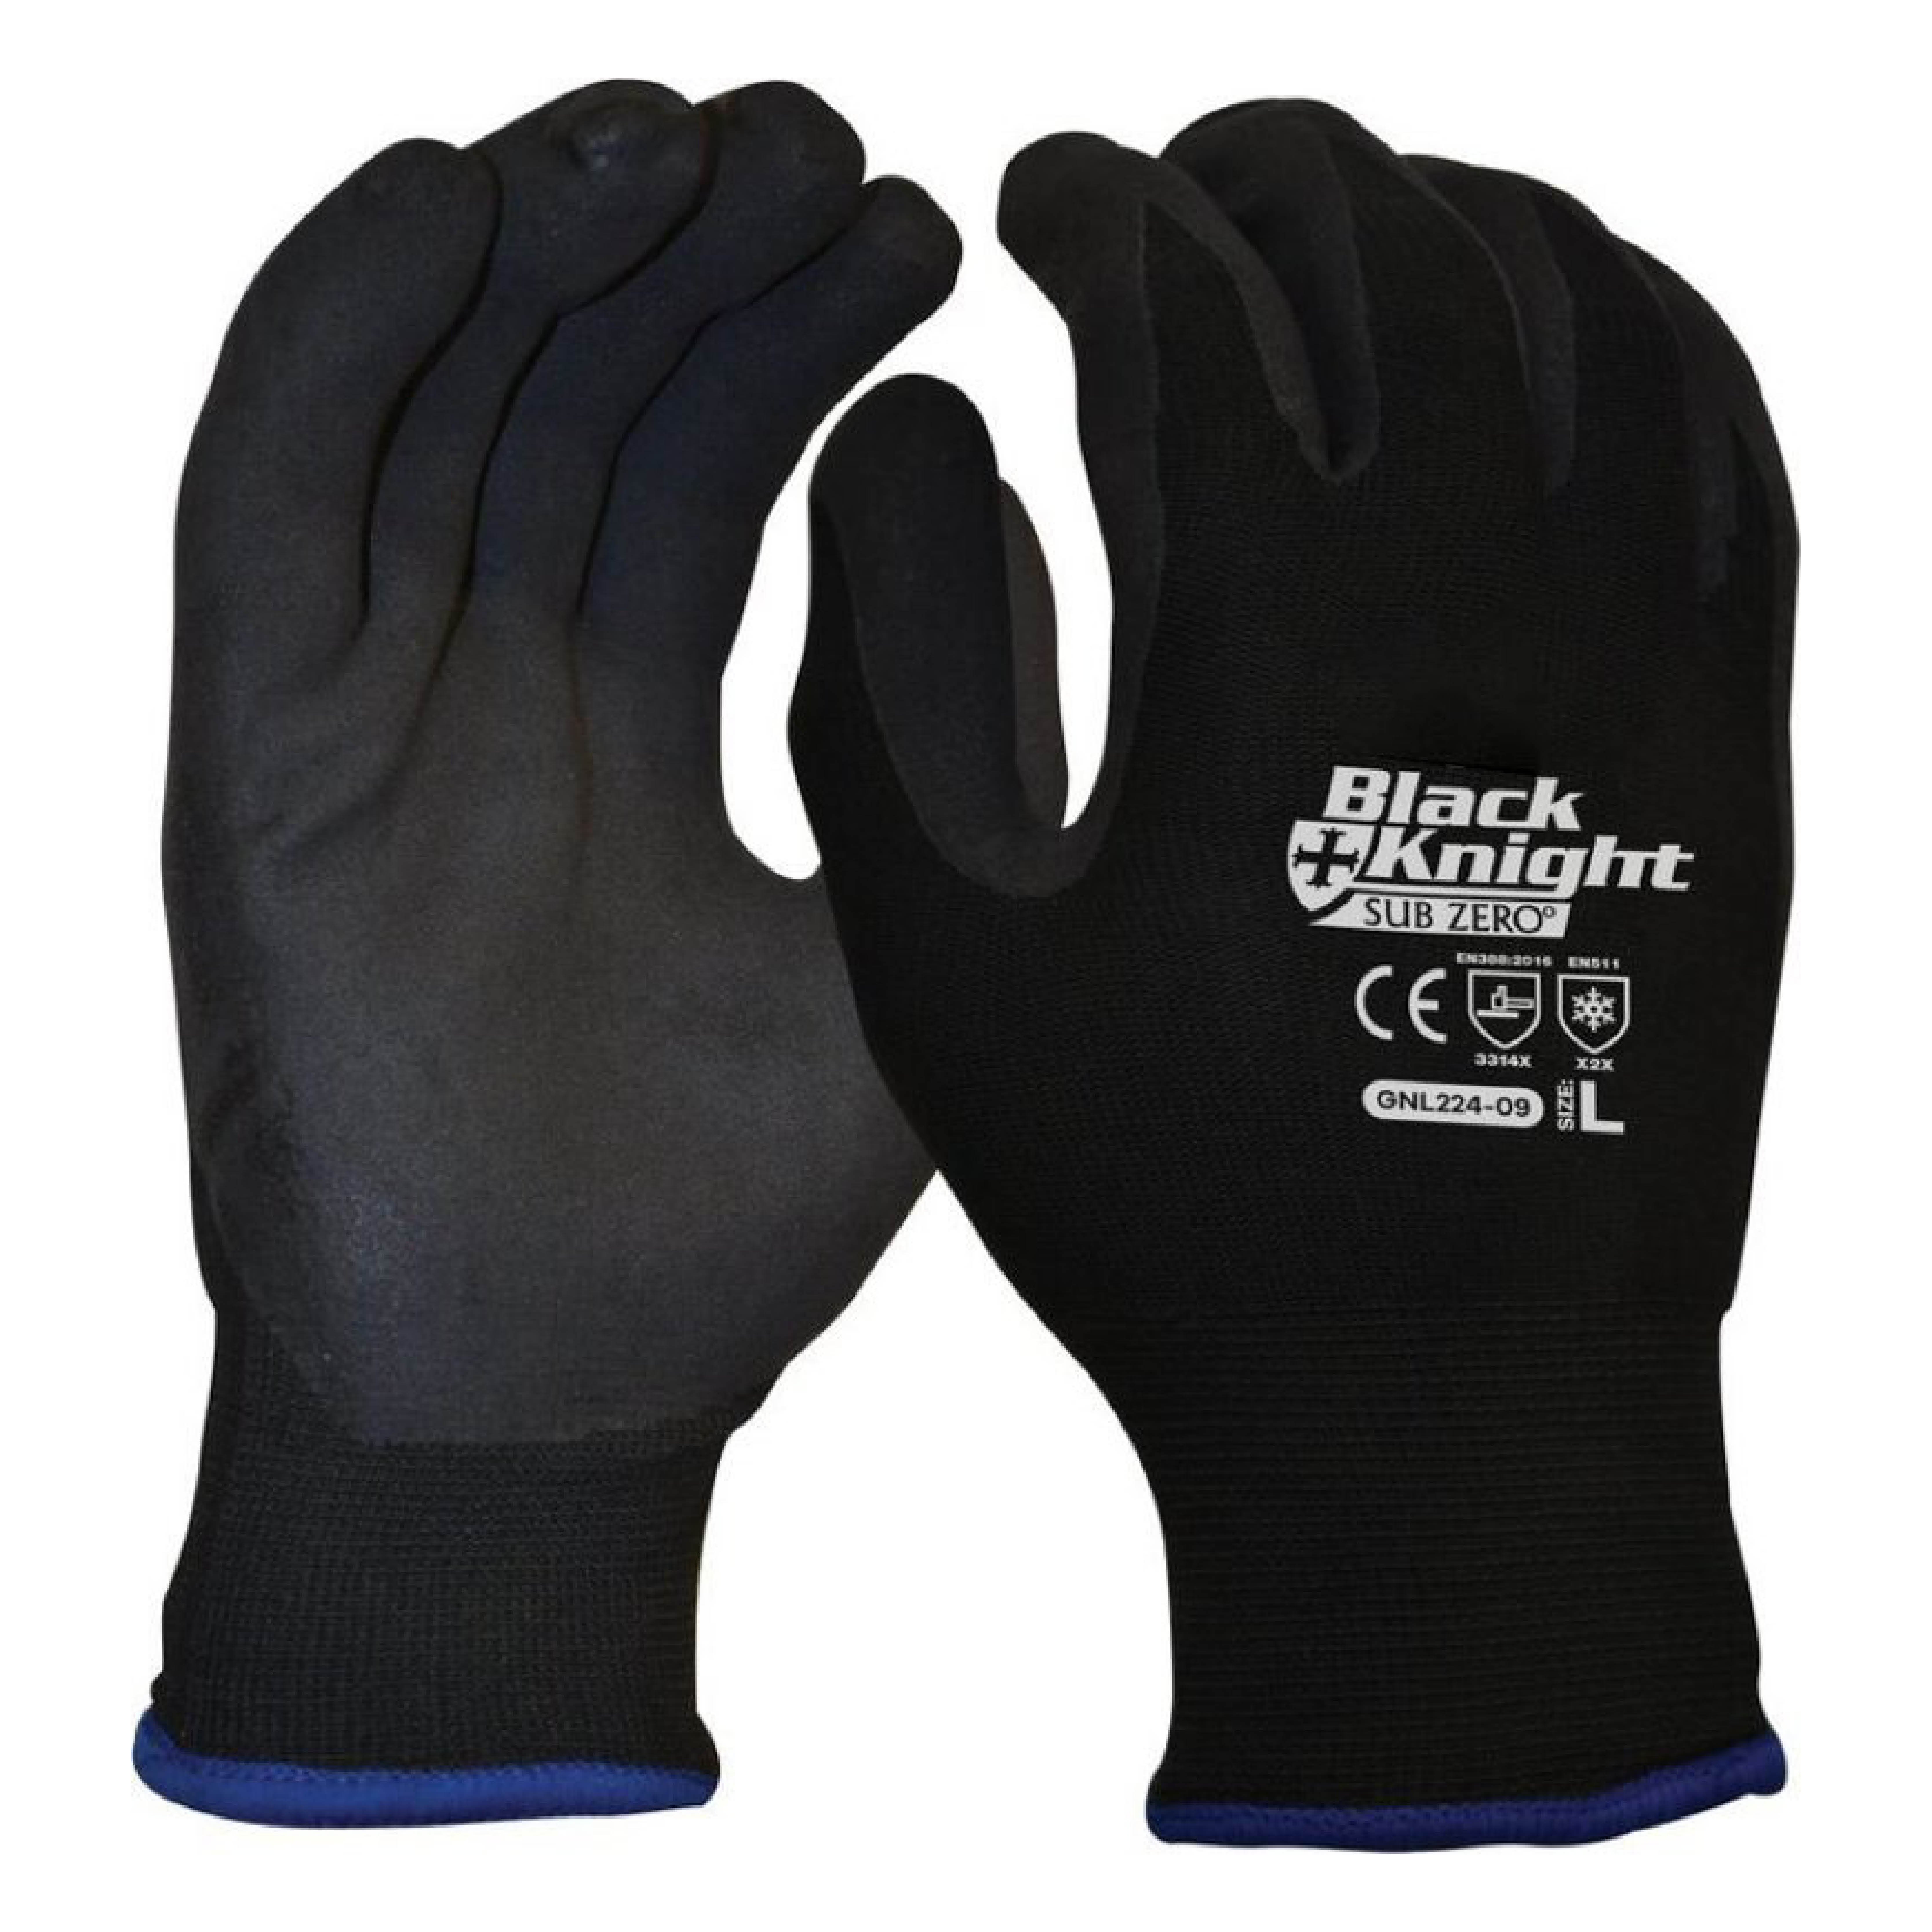 Black Knight Sub Zero Thermal Glove Medium Size 8 (1 pair)